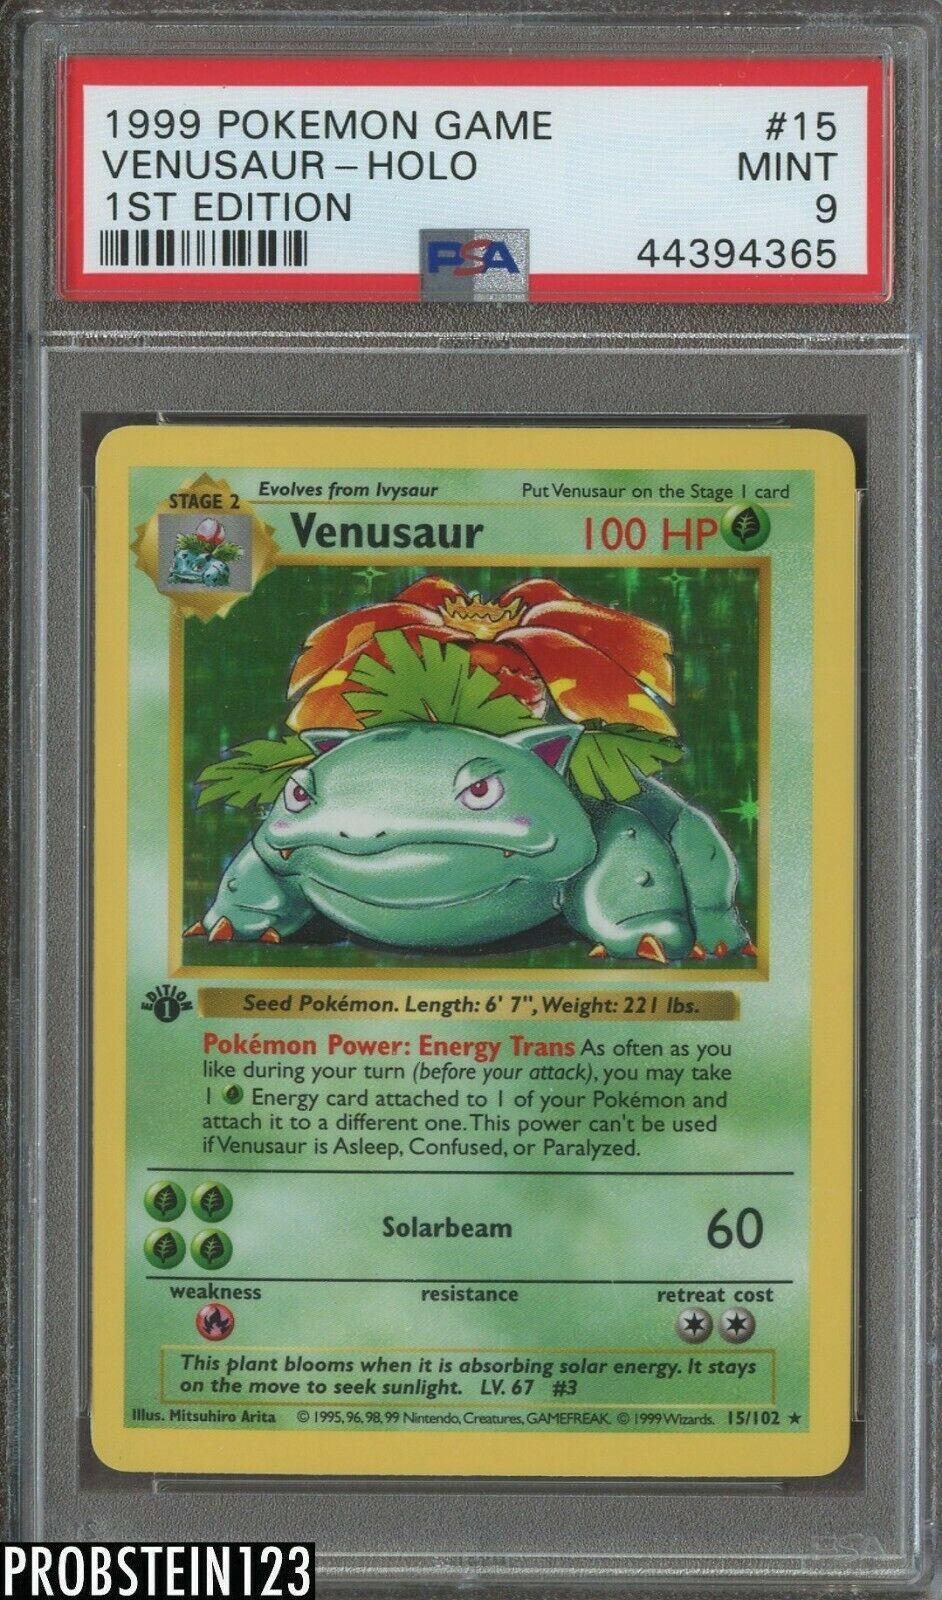 1999 Pokemon Game 1st Edition 15 Venusaur Holo PSA 9 MINT